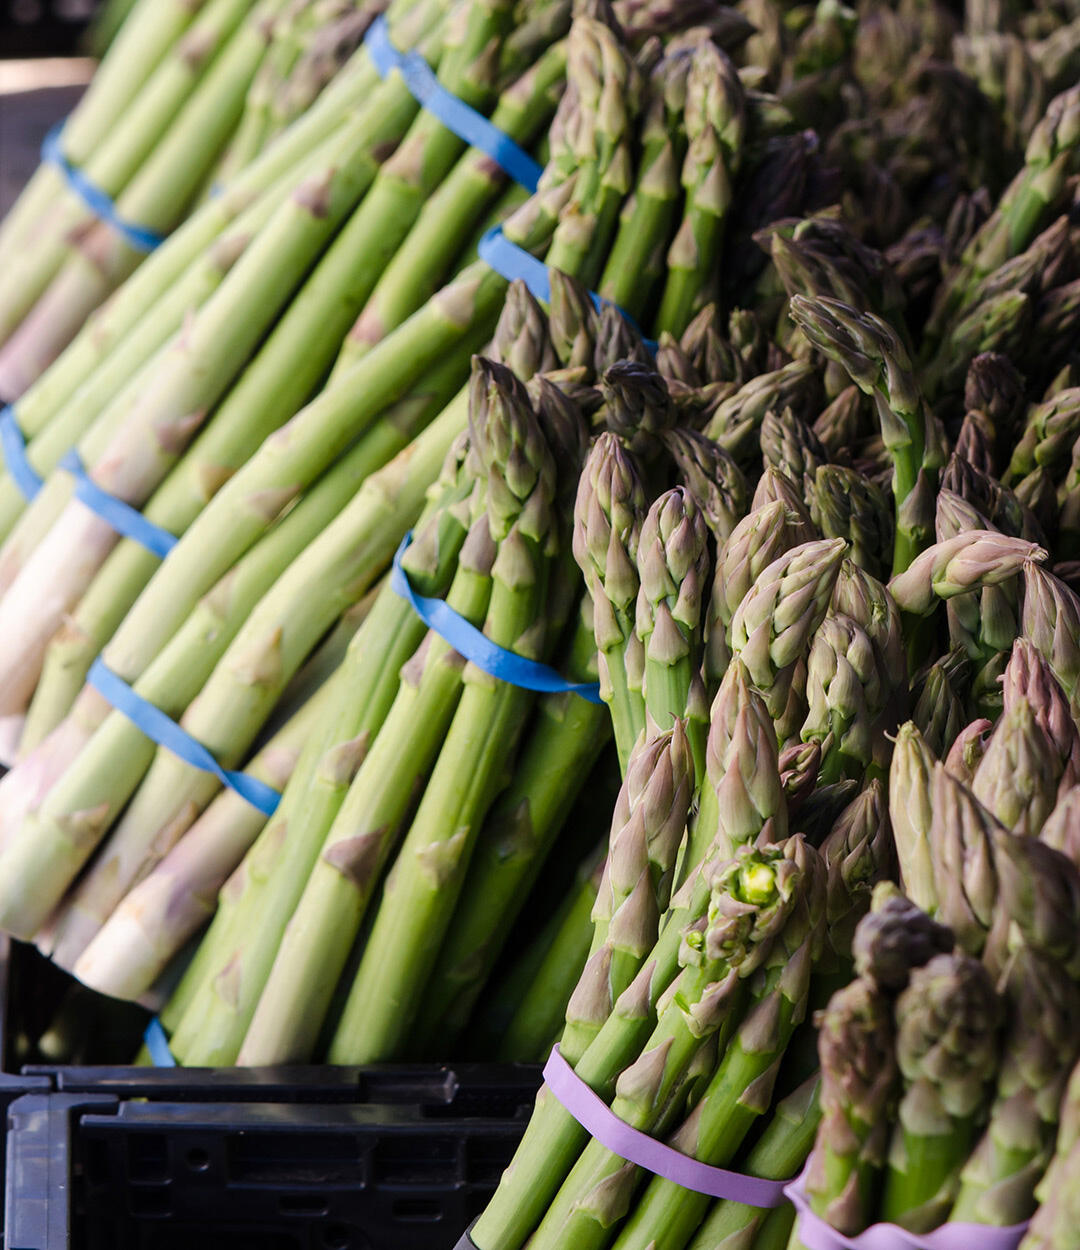 Asparagus from Zuckerman's at the Santa Monica Farmers Market